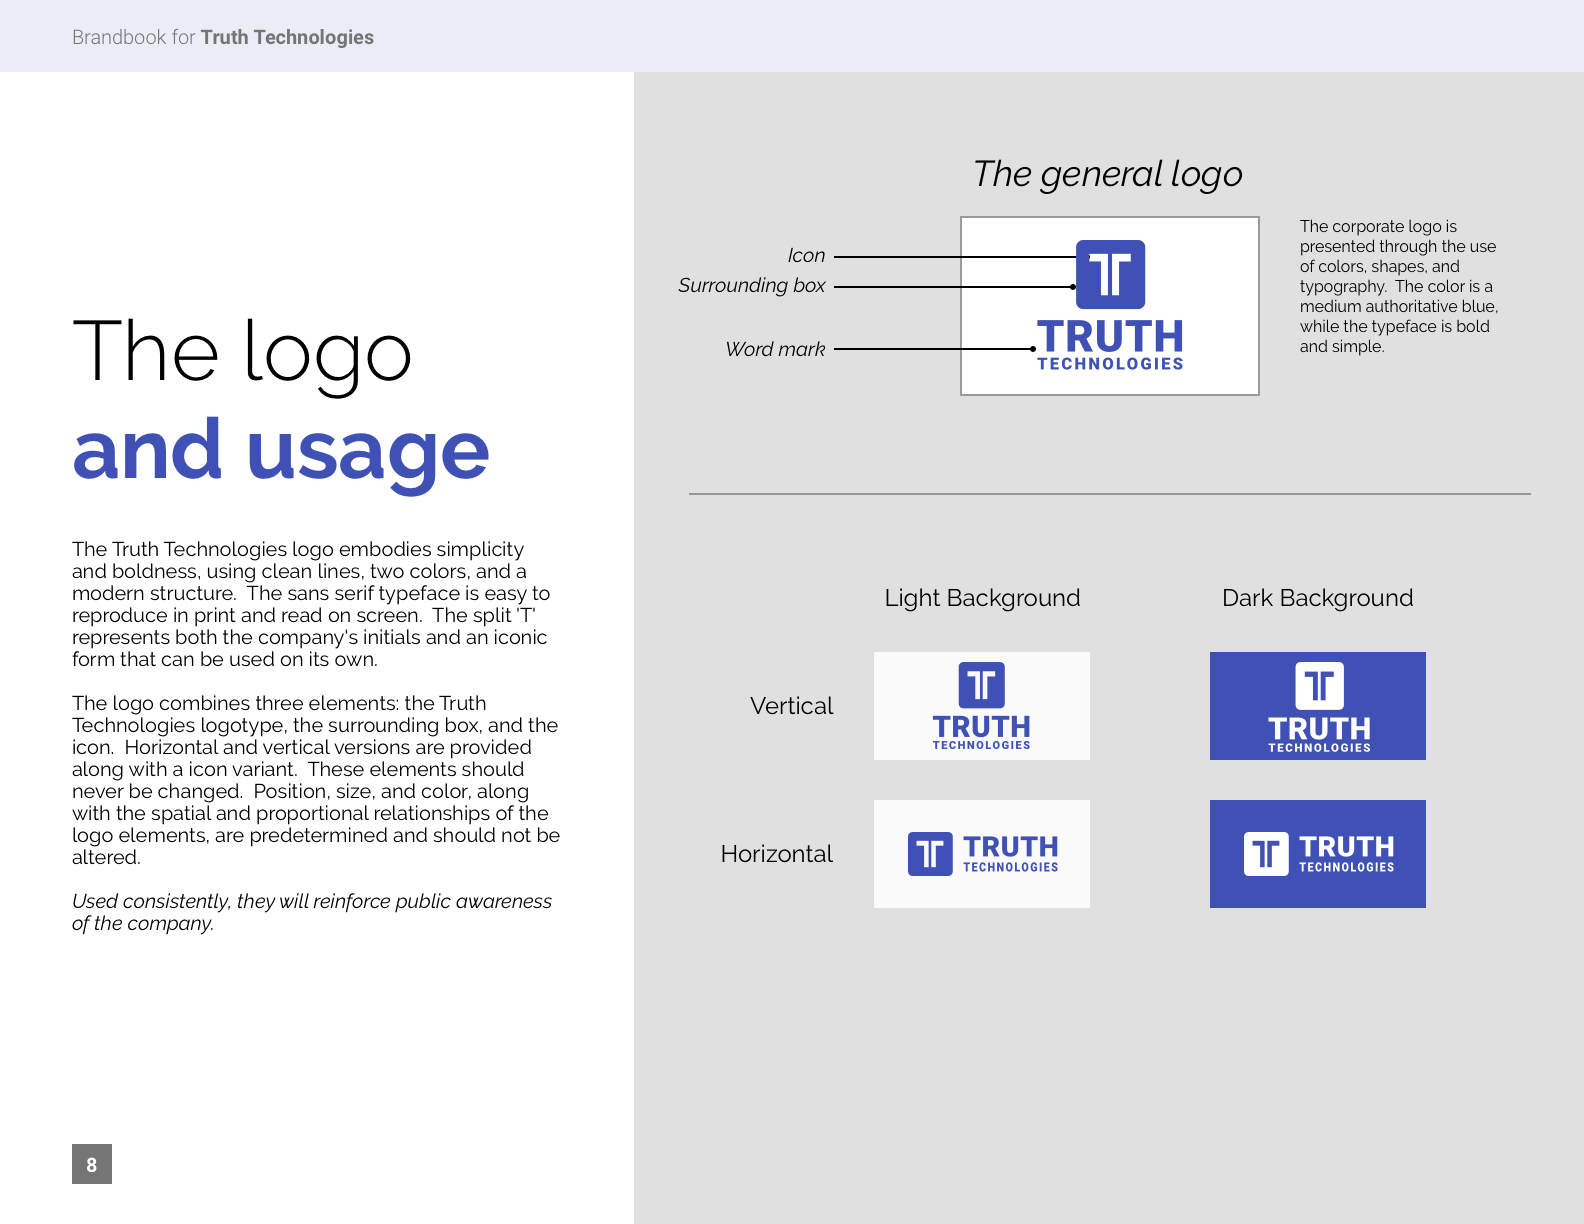 rebrand-04-brand-guide-04-logo.png